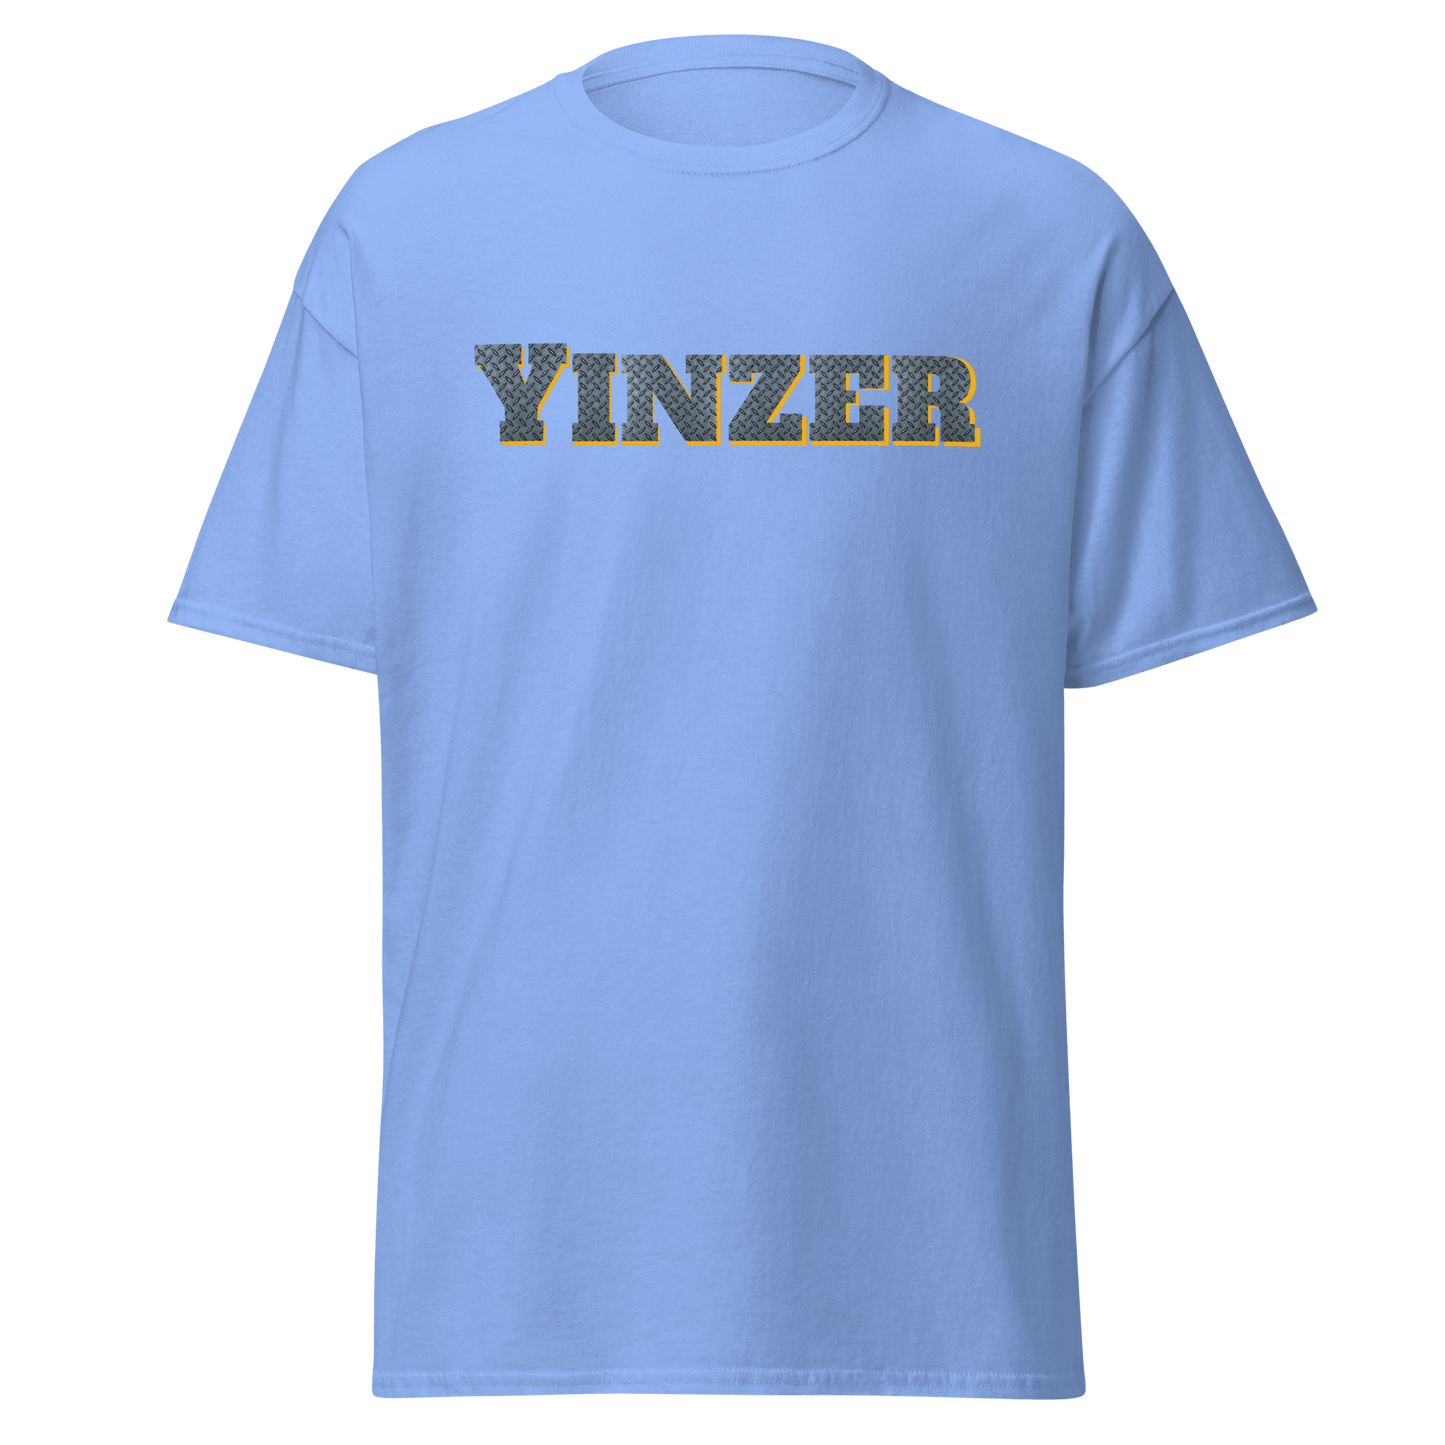 Steel Yinzer T-Shirt - Burgh Proud Yinzergear Carolina Blue S 